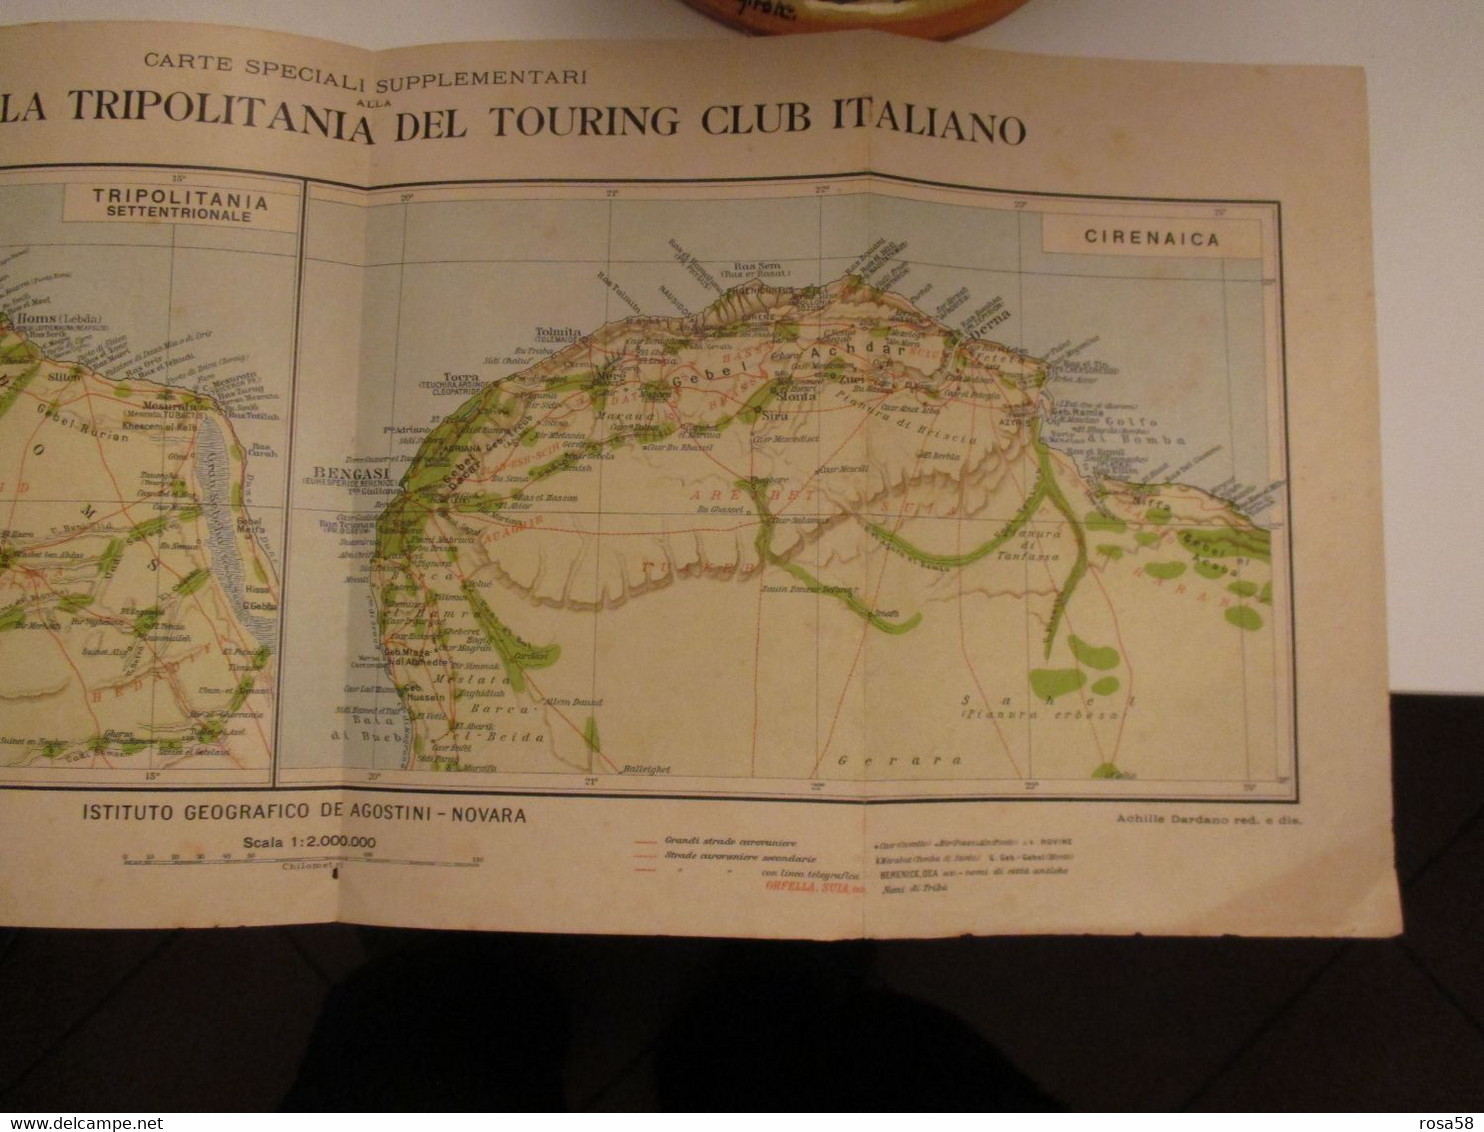 AFRICA Libia Carta Geografica Edizione DE AGOSTINI Novara  Cirenaica Tripolitania Touring Club Italiano Coloinie Italian - Mundo